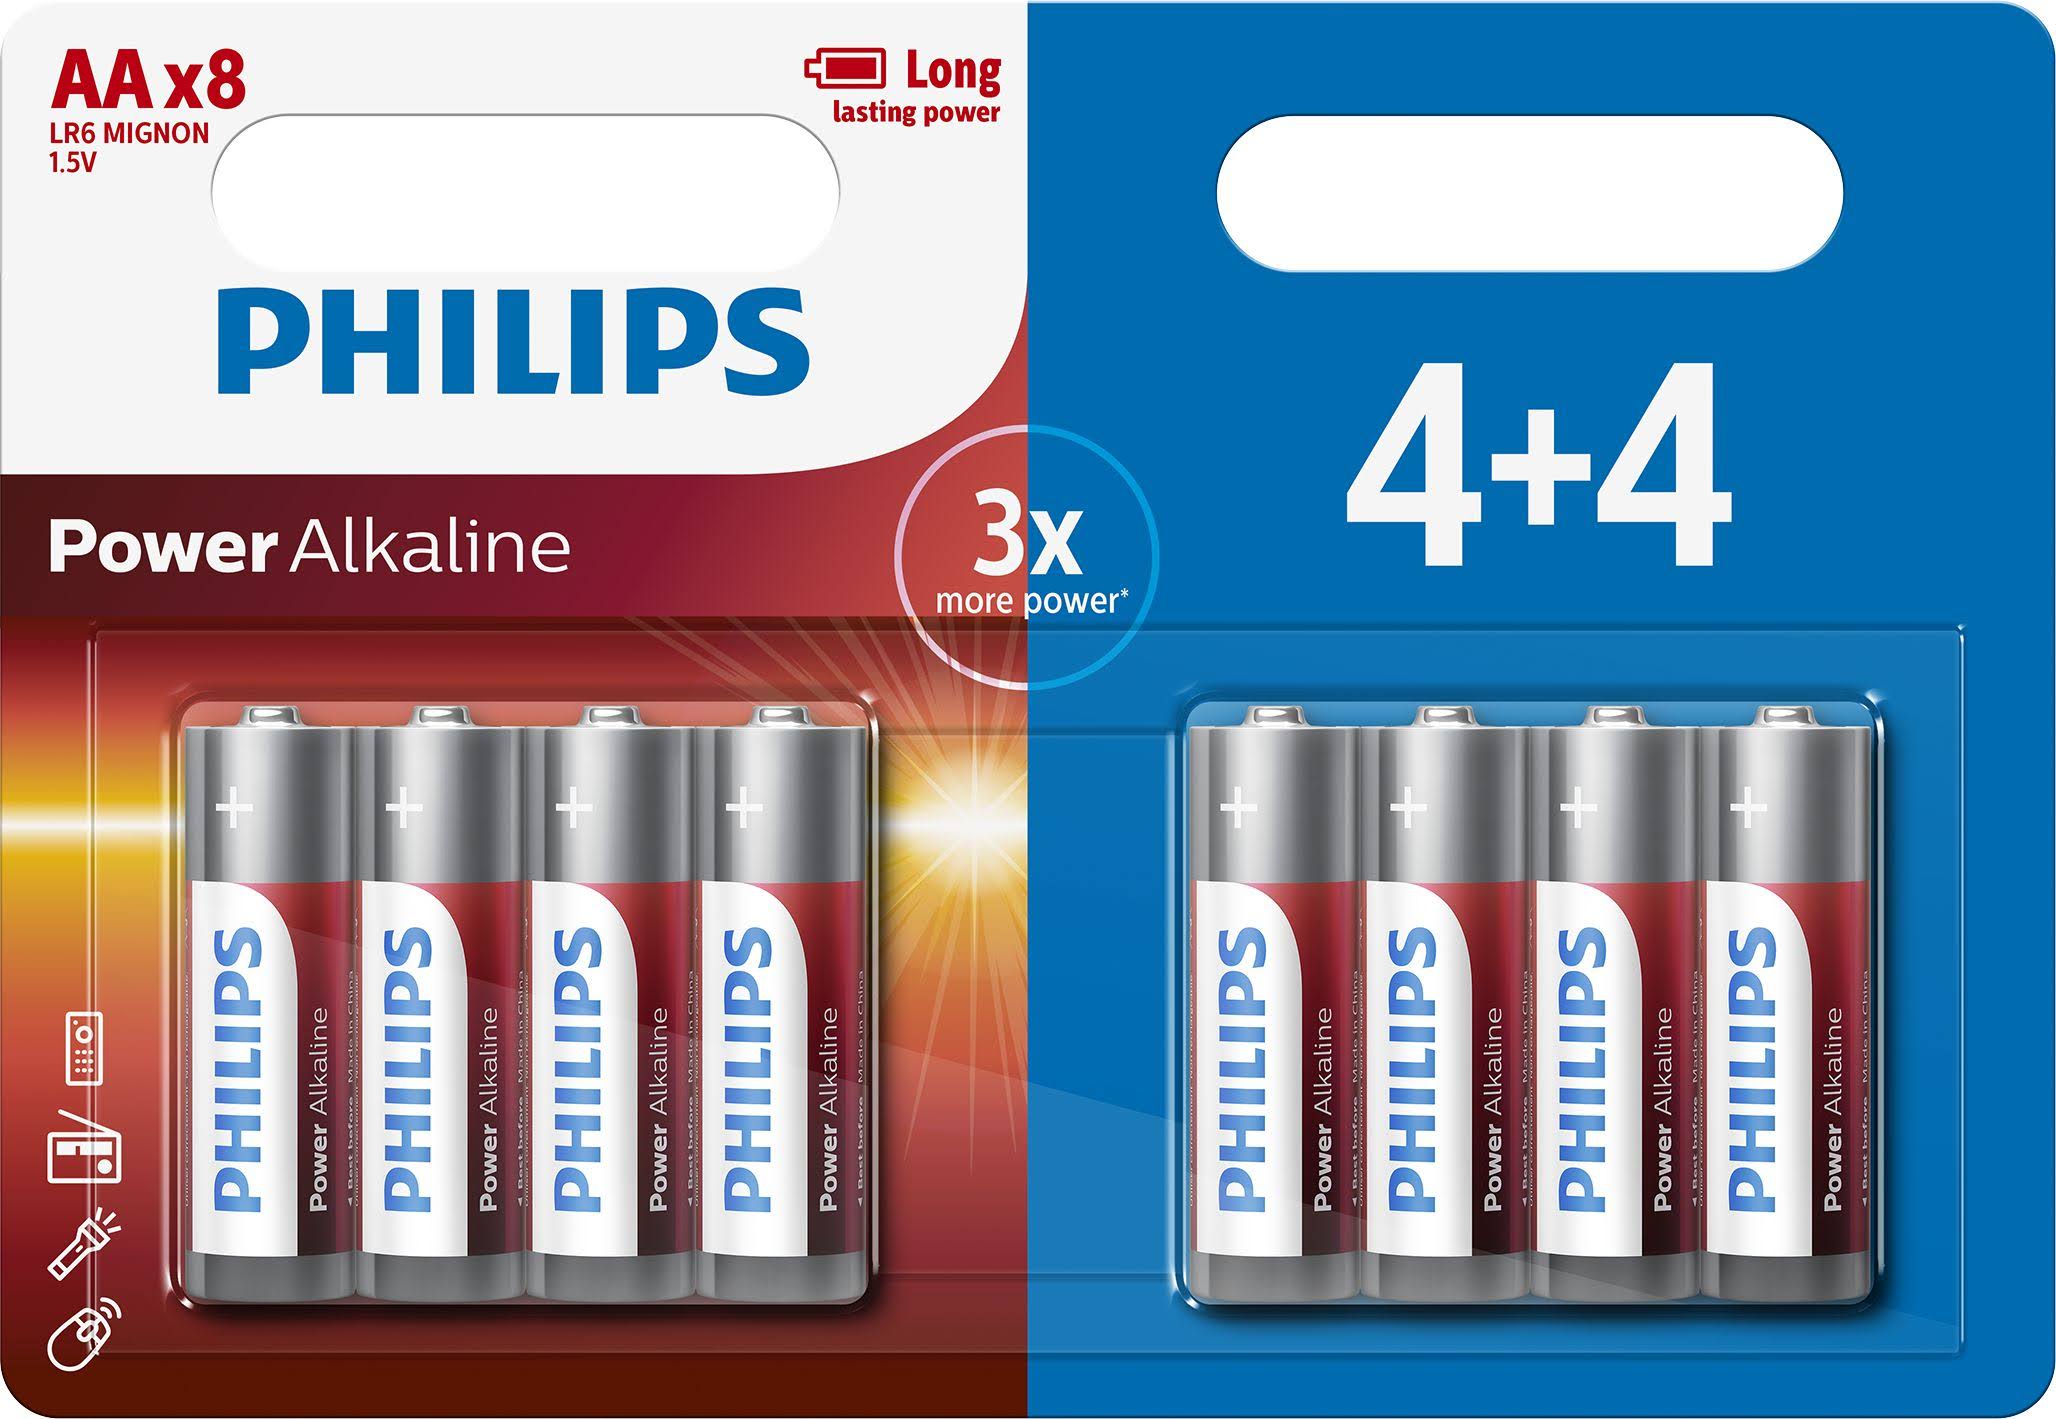 Phillips Ultra Alkaline AA LR6 Batteries 8 Pack - Red